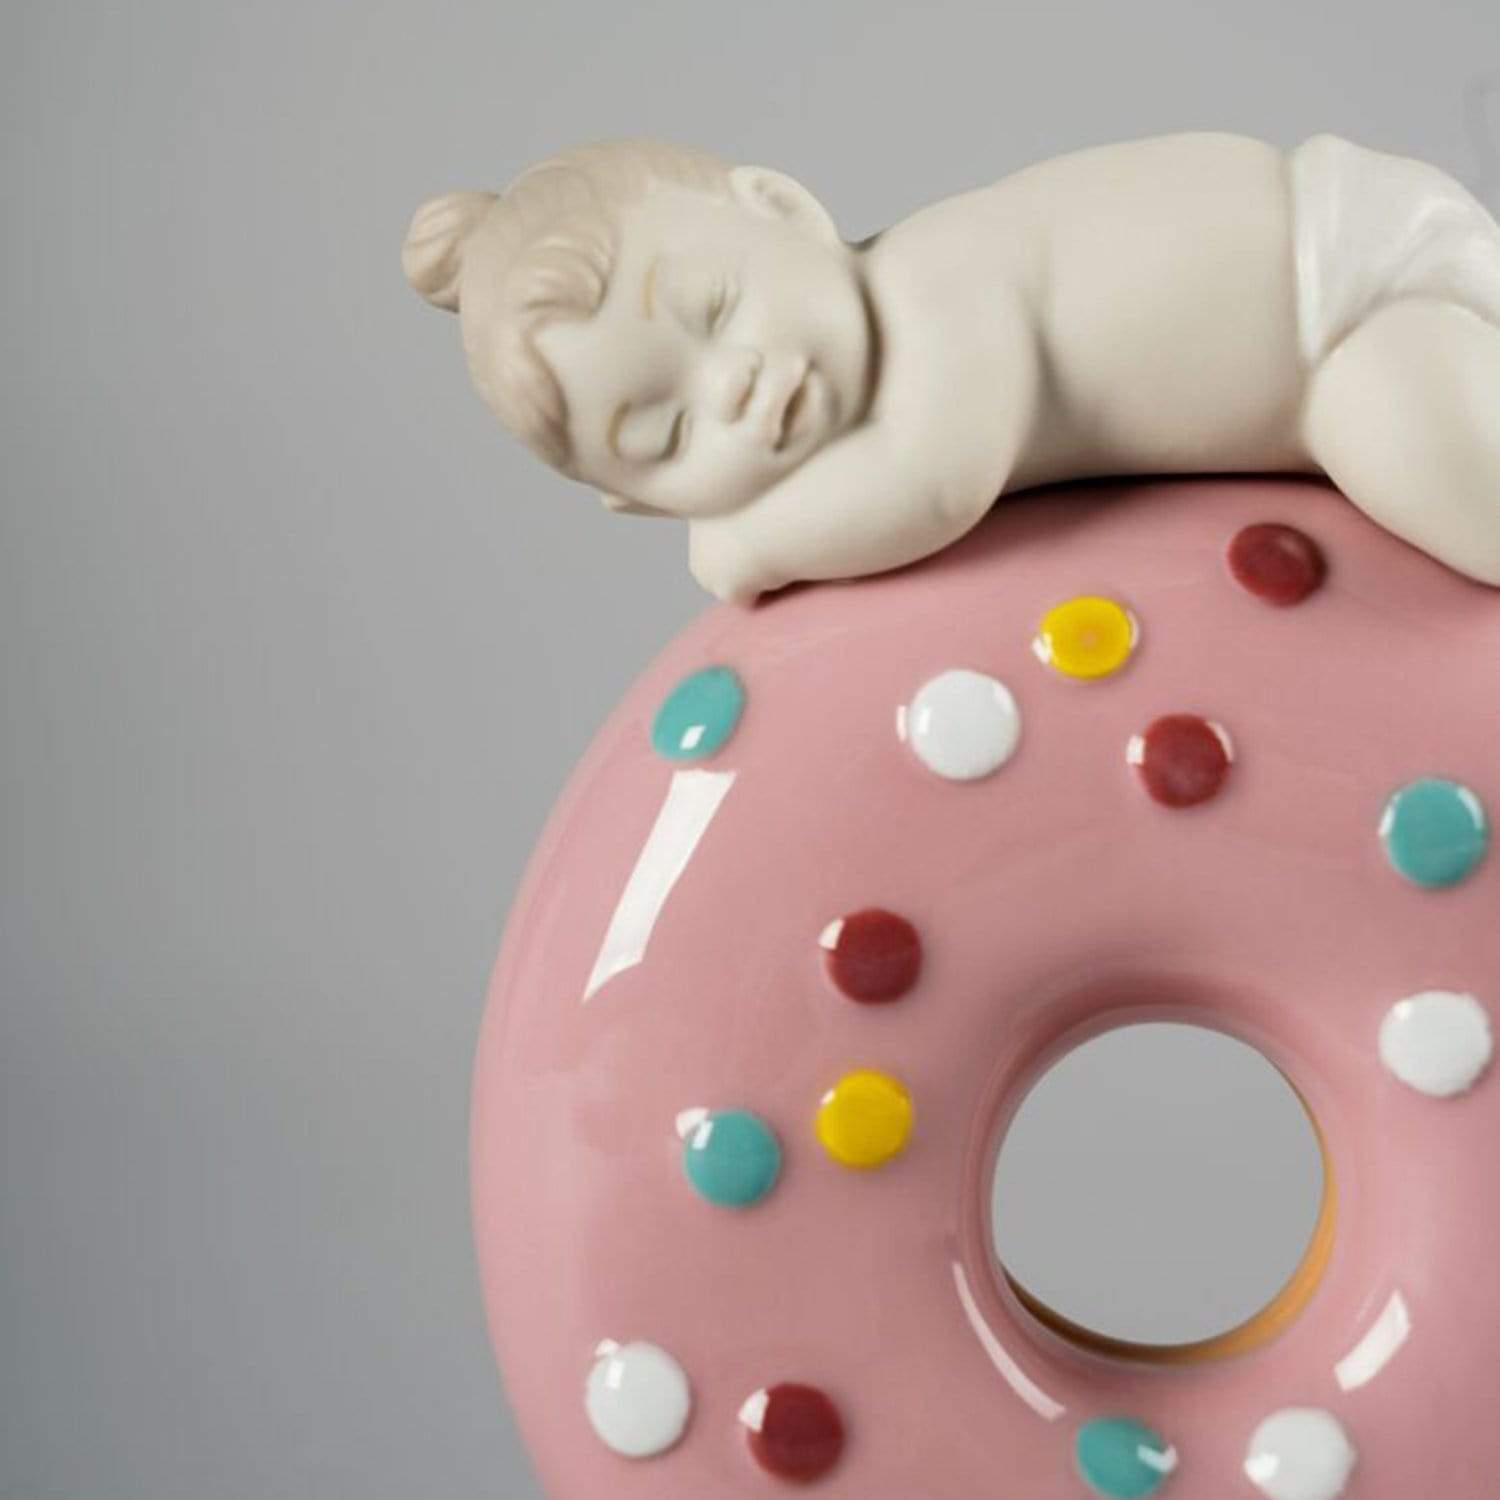 Lladro My Sweet Love Baby Girl Figurine - Pink - 1009376 - Jashanmal Home